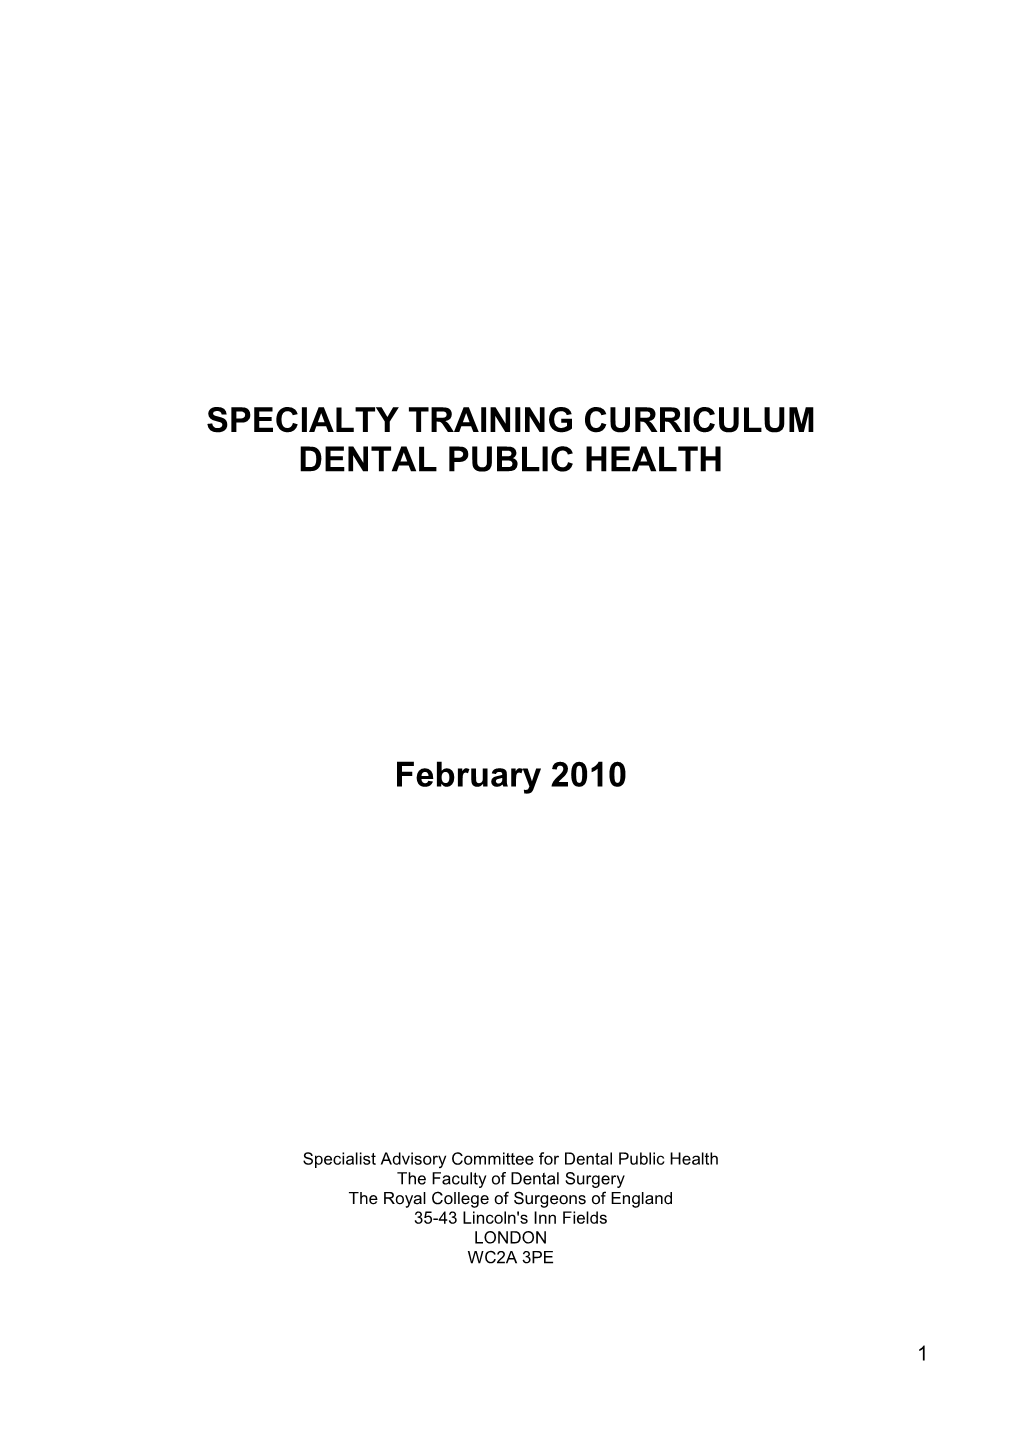 Specialty Training Curriculum in Dental Public Health